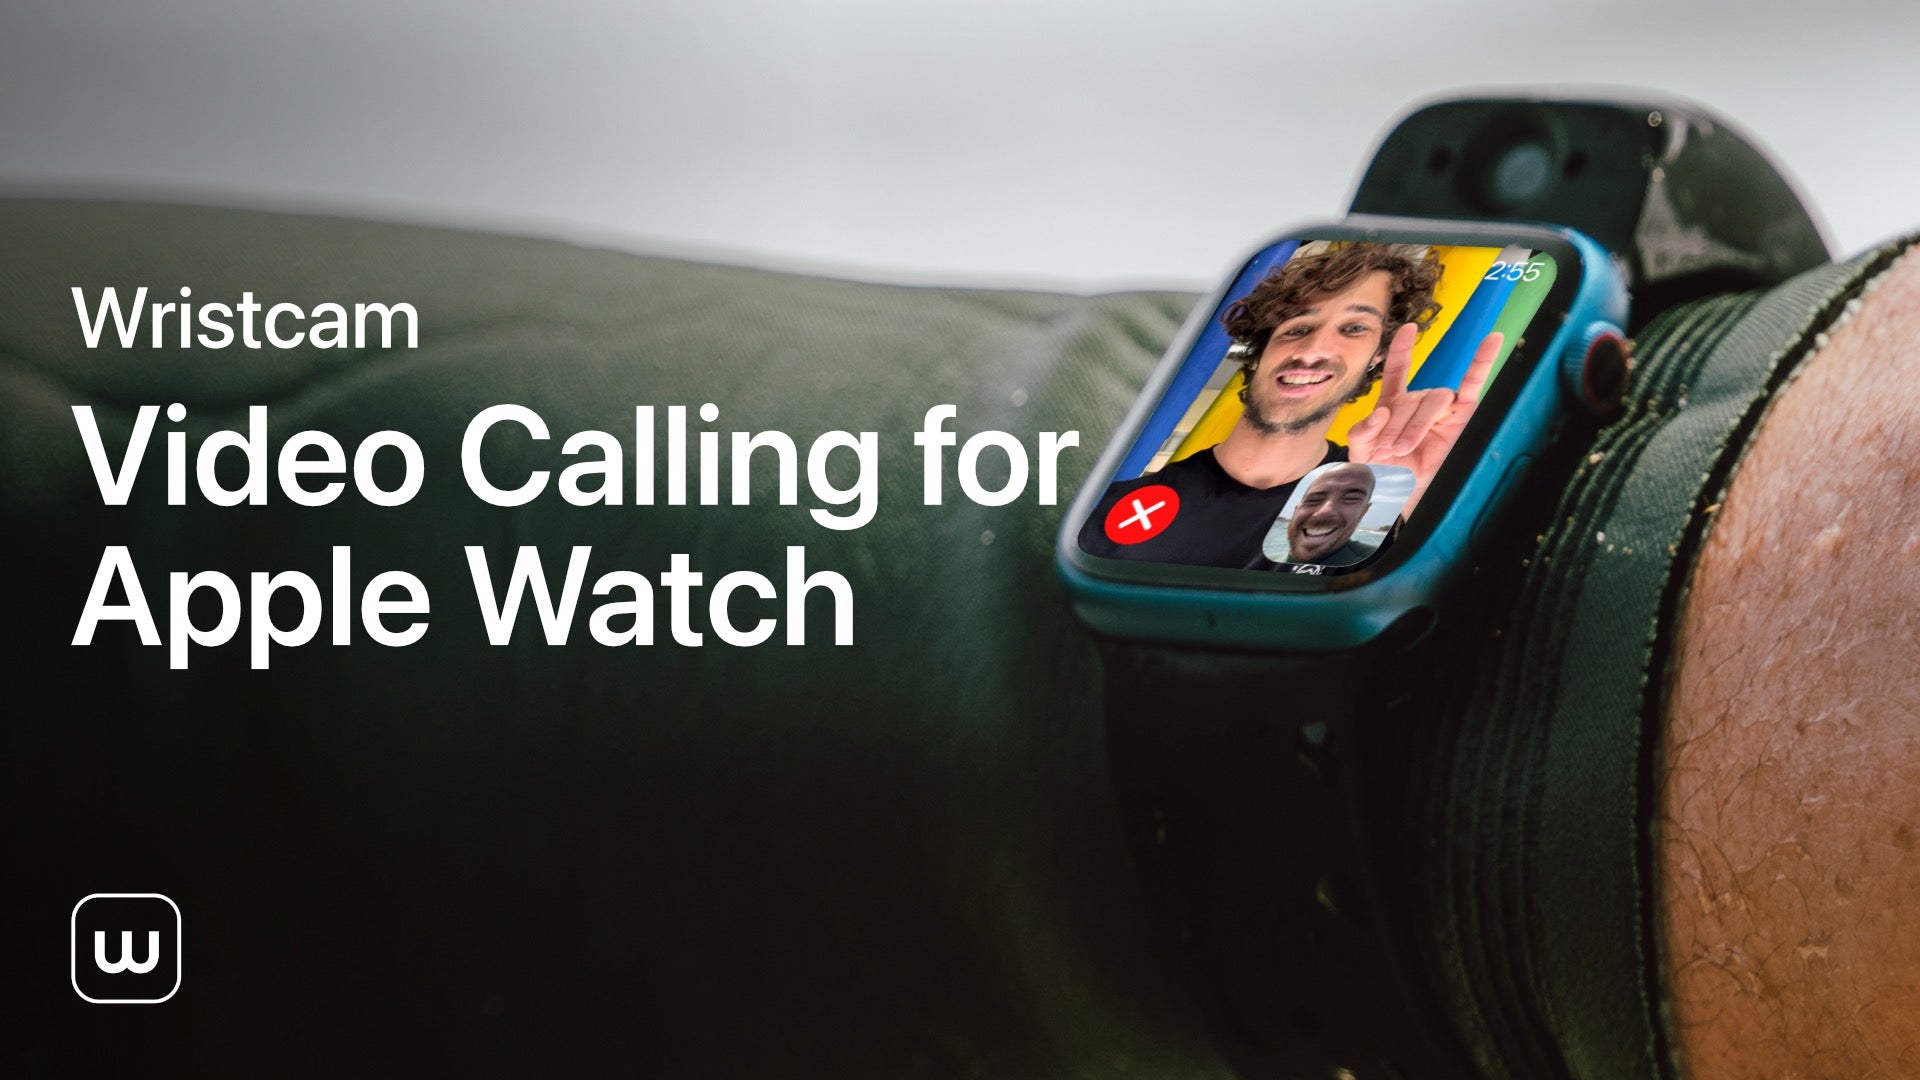 MacRumors: Wristcam Bringing Video Calling Feature to Apple Watch